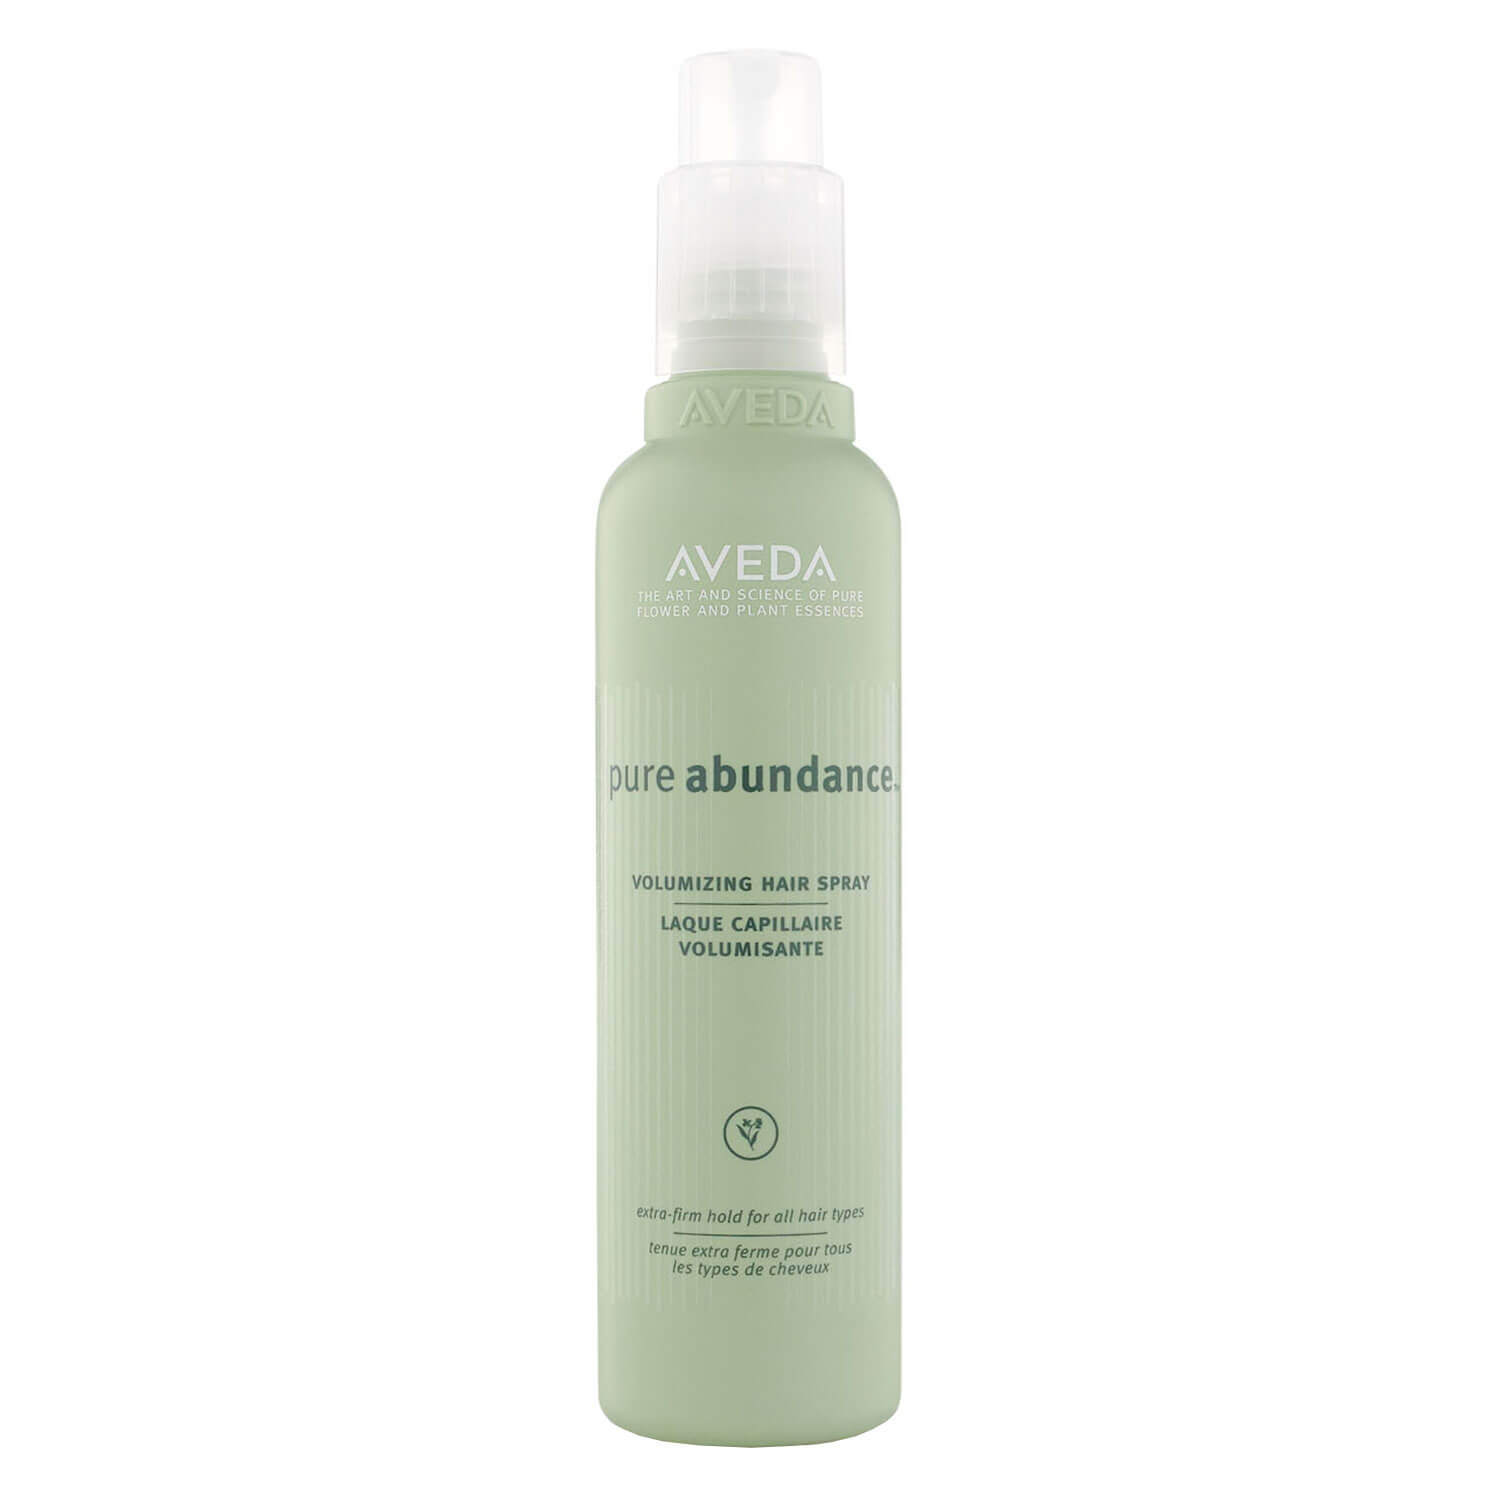 Product image from pure abundance - volumizing hair spray